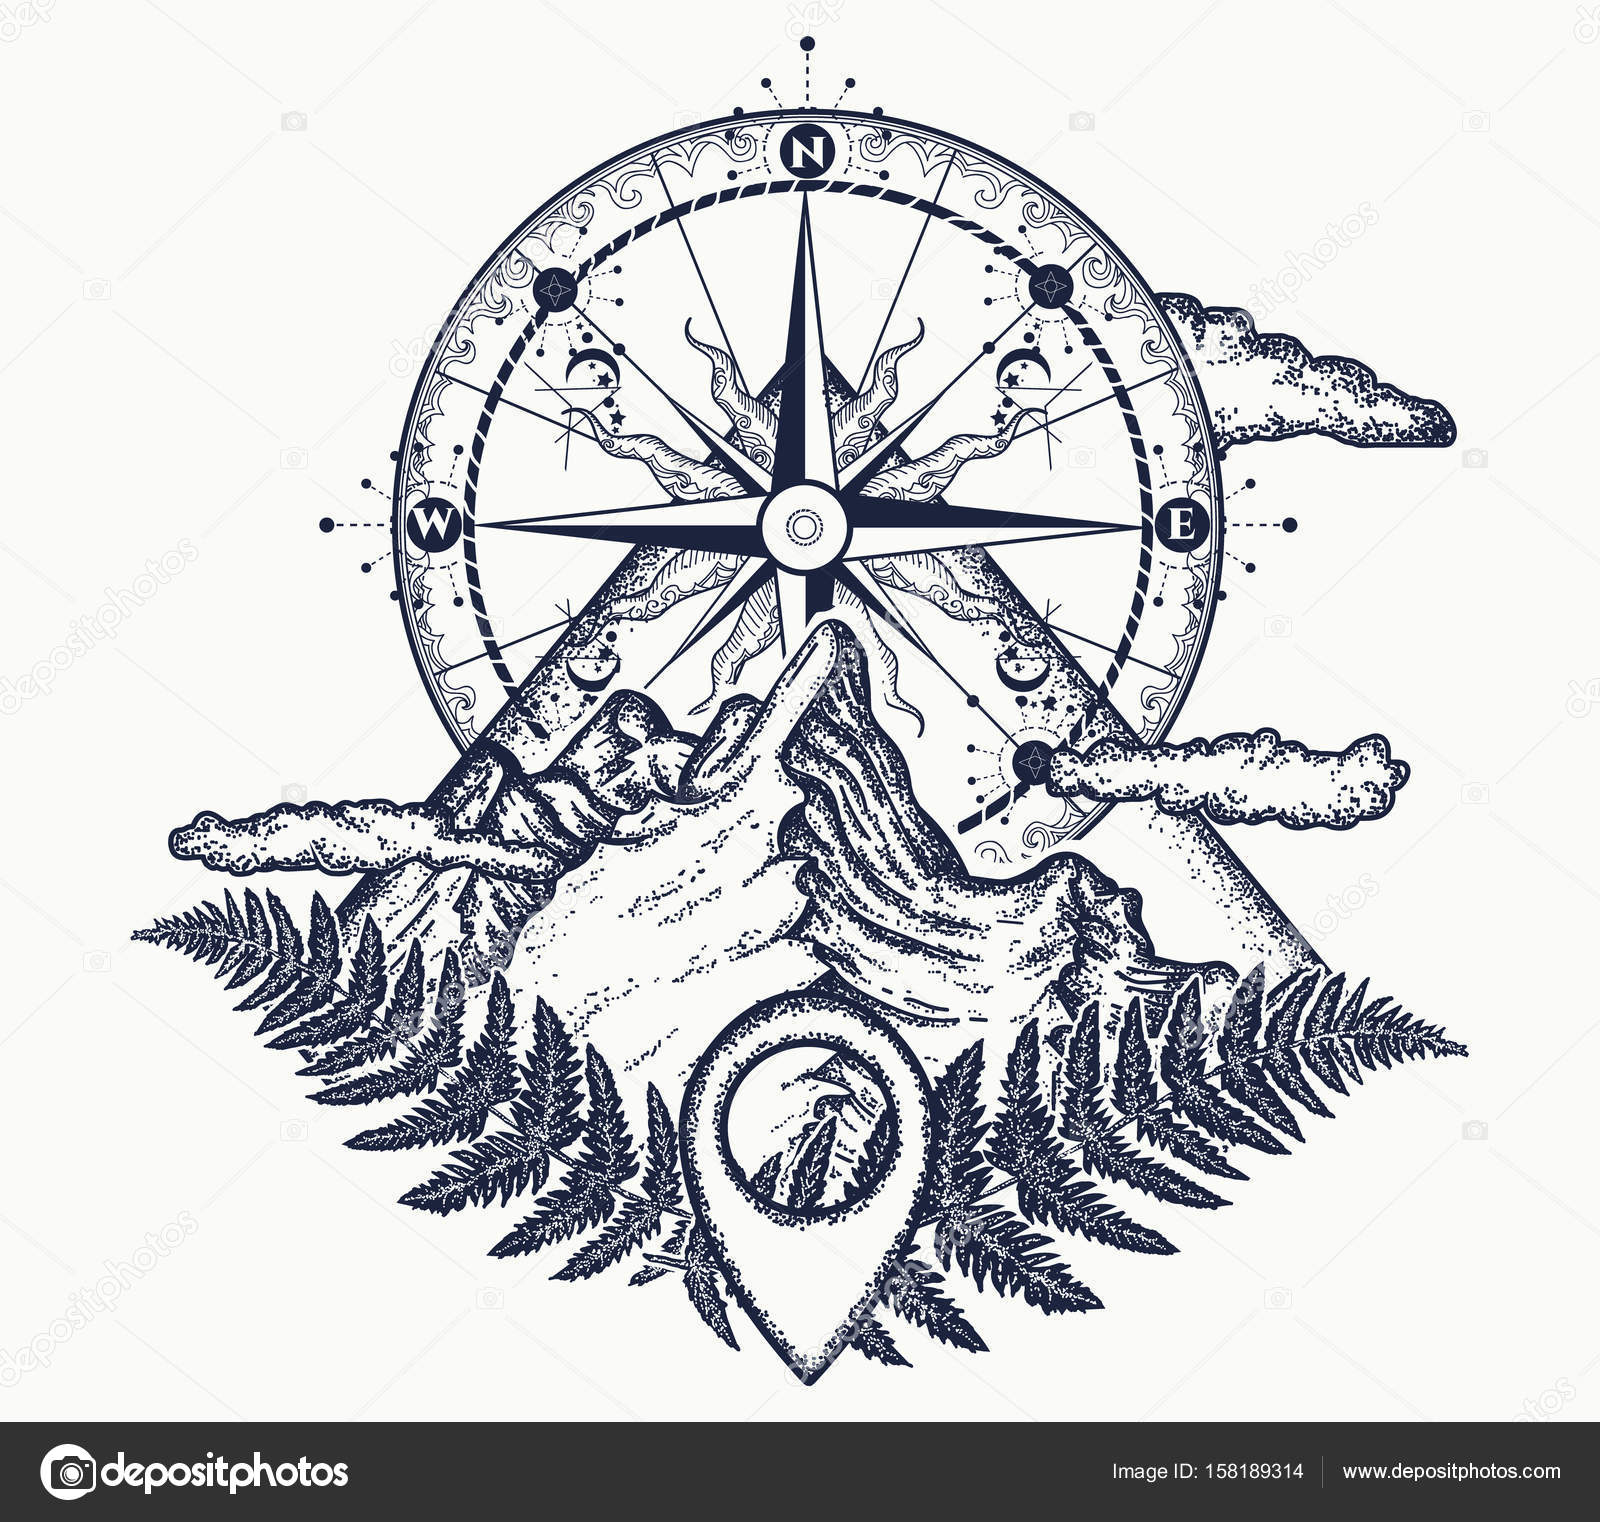 depositphotos_158189314 stock illustration mountains and compass tattoo symbol